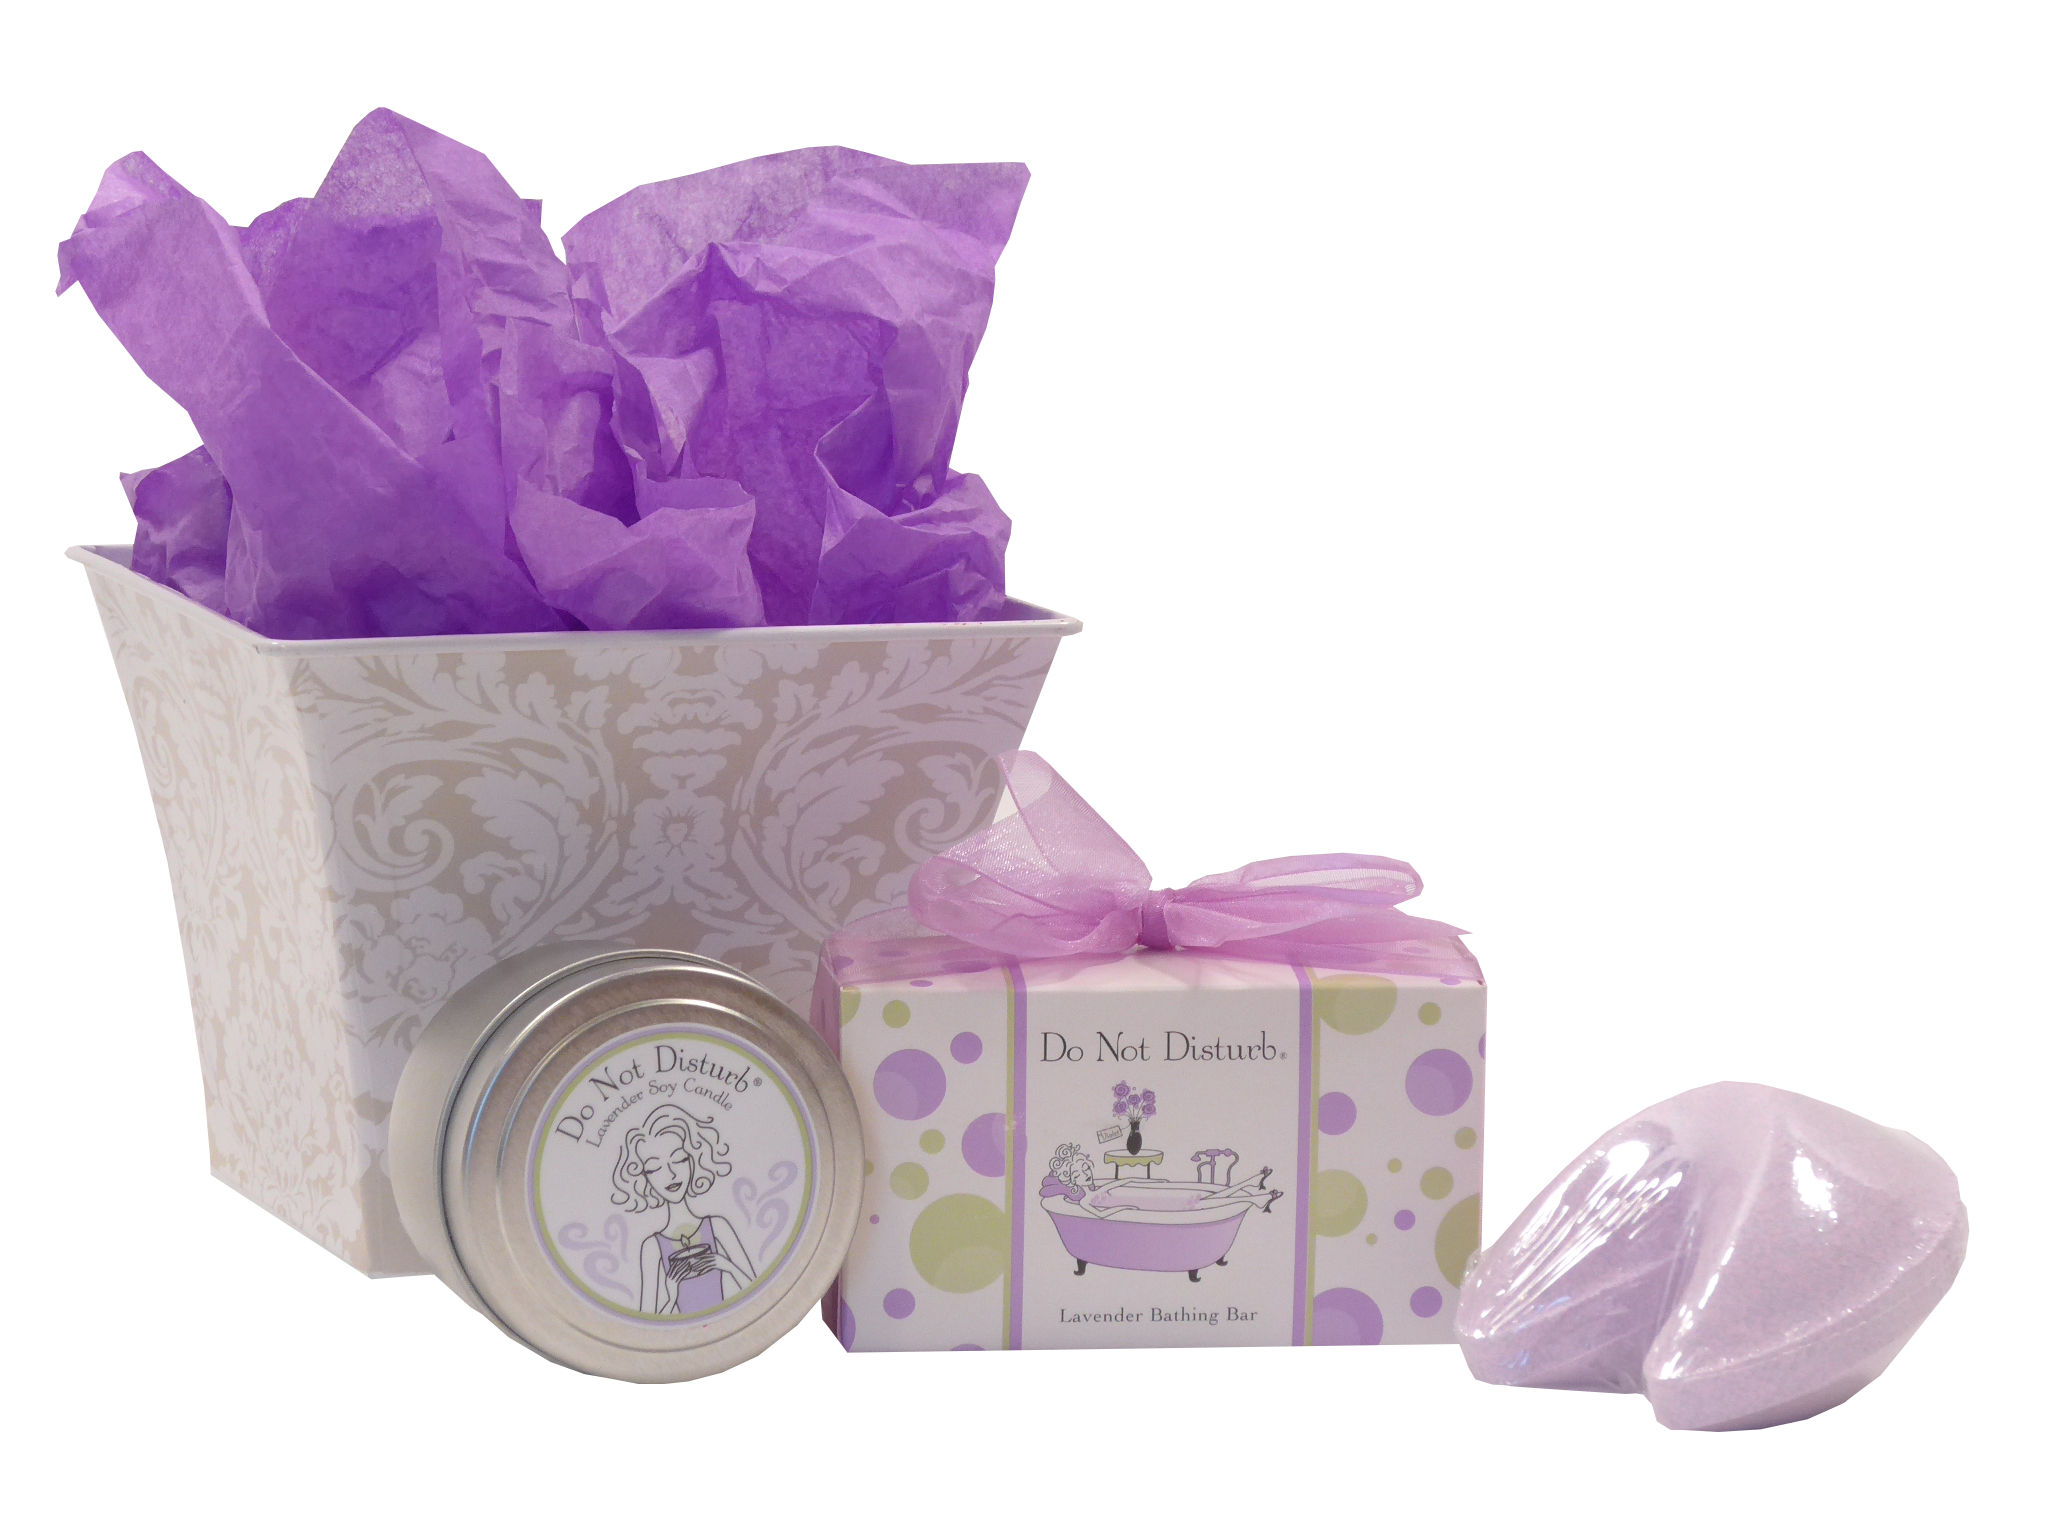 Do Not Disturb lavender gift set